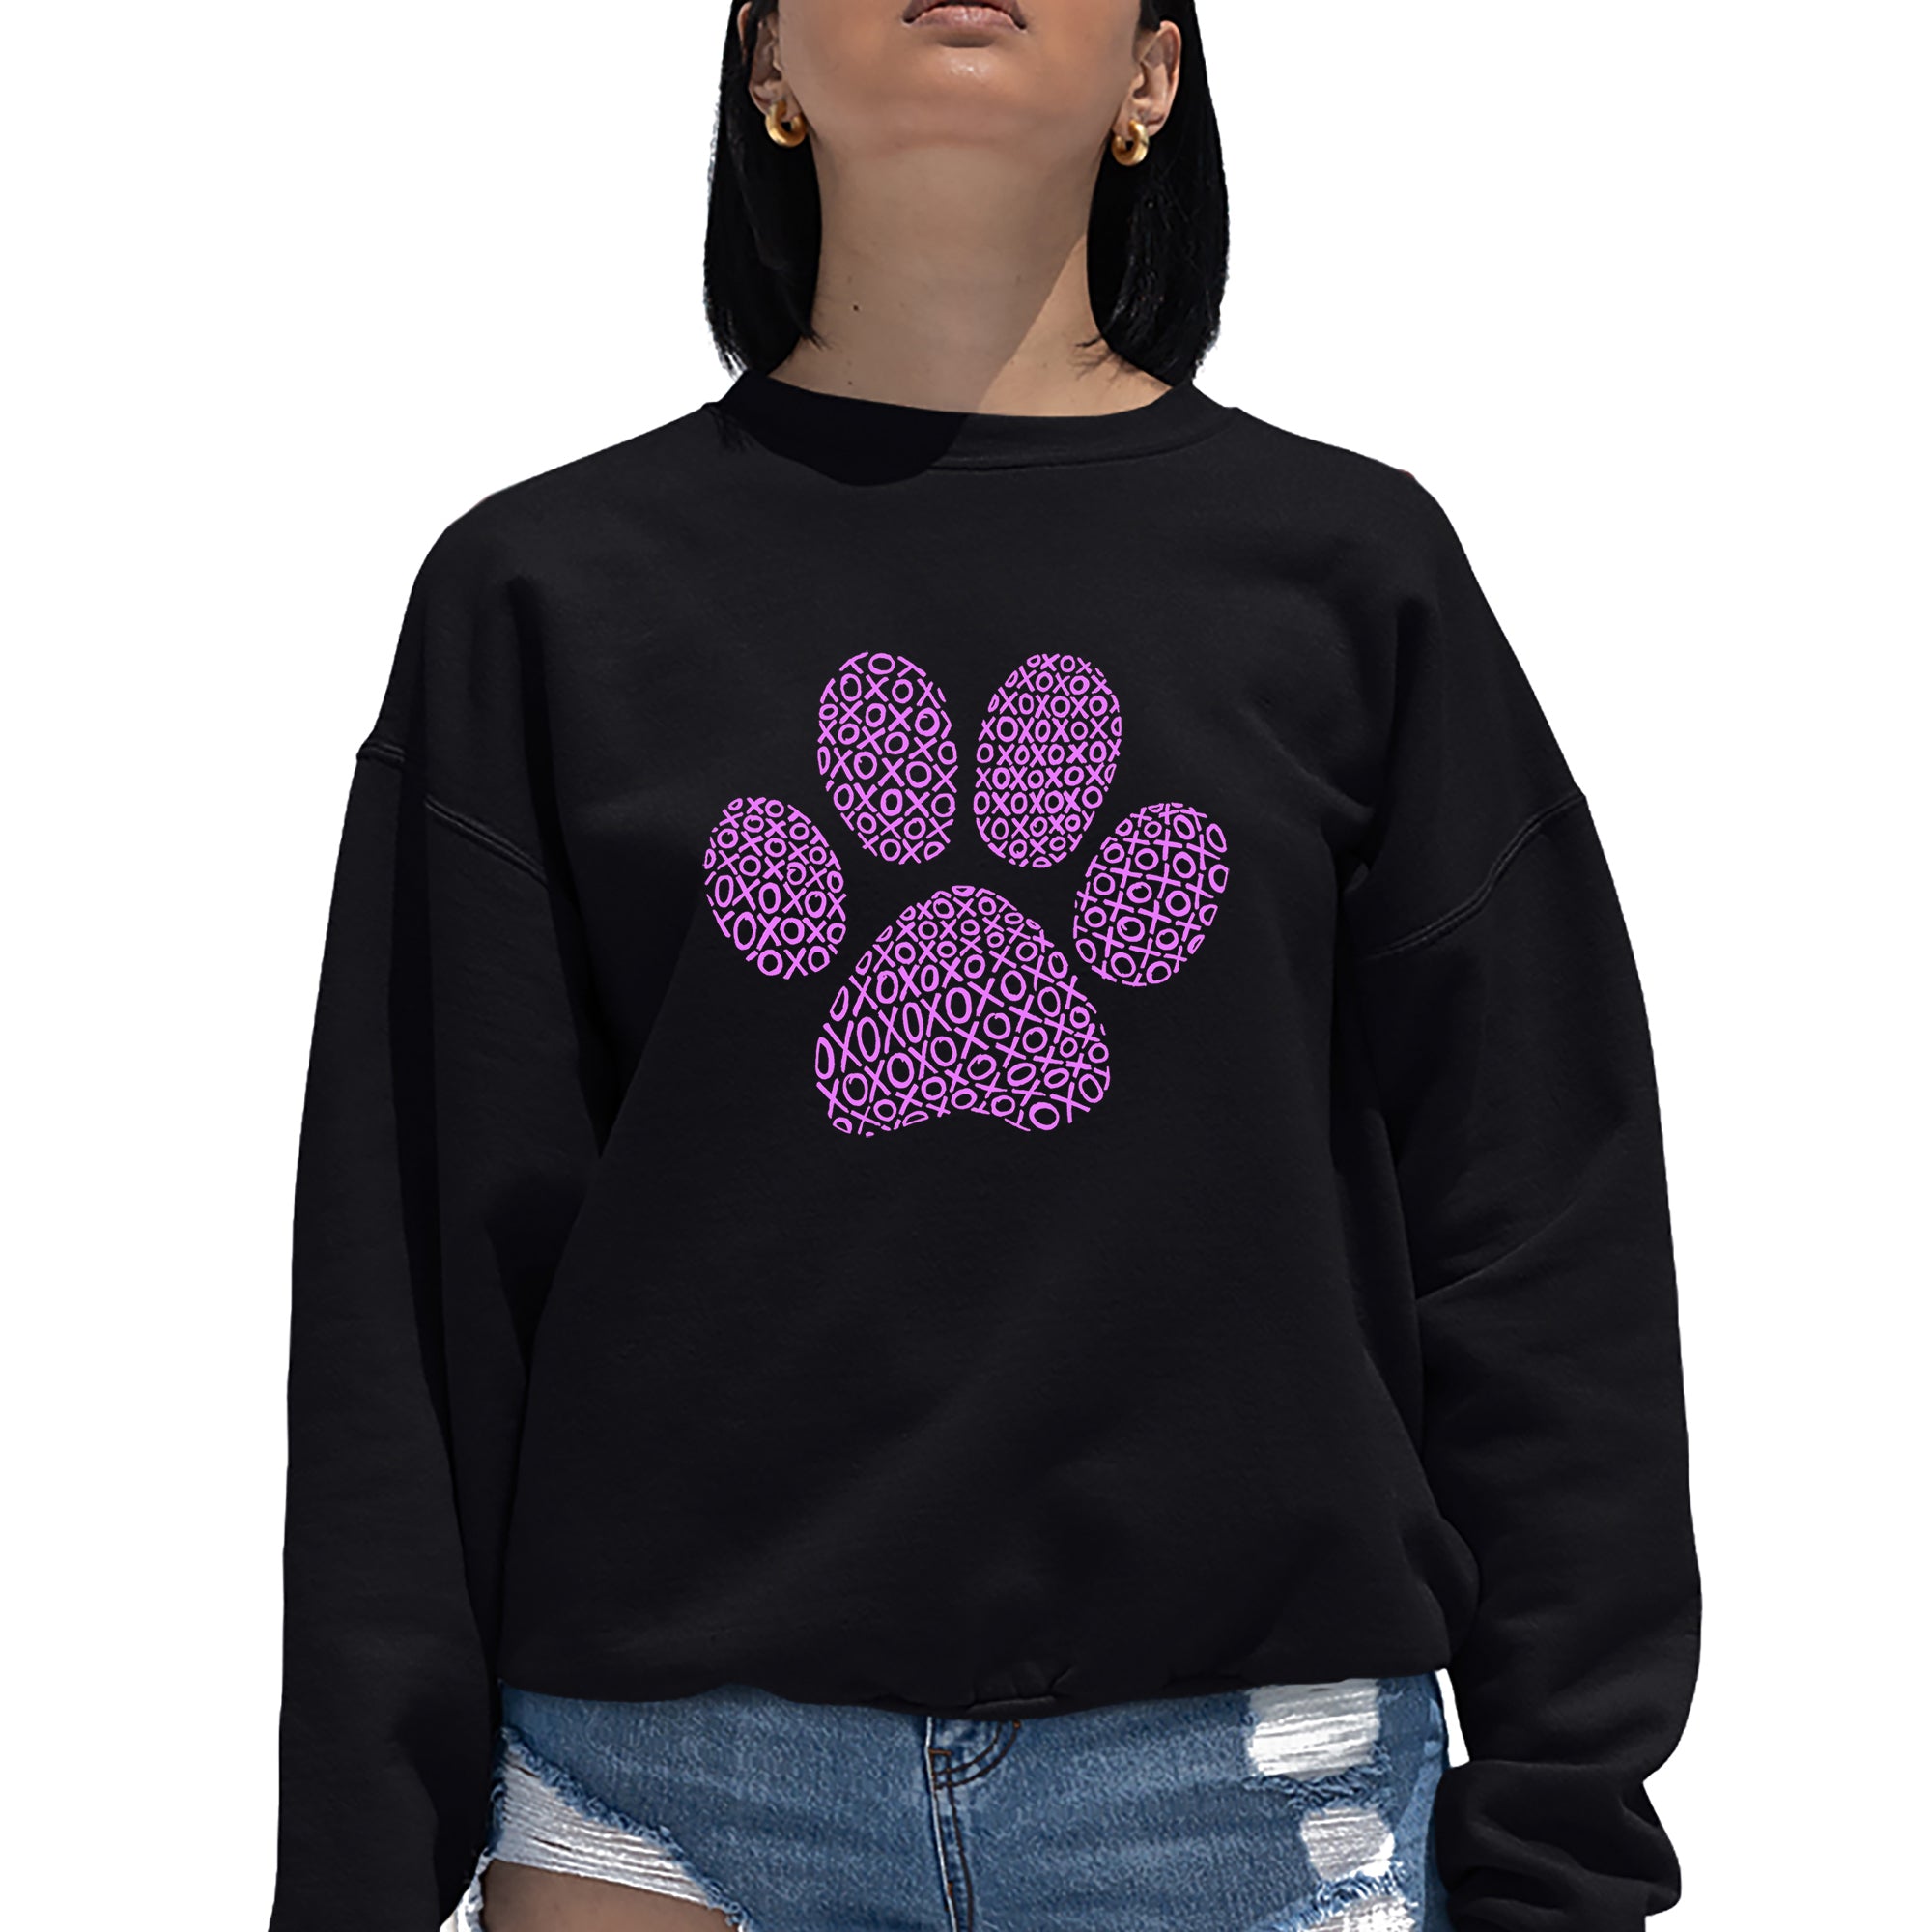 XOXO Dog Paw - Women's Word Art Crewneck Sweatshirt - Black - Large